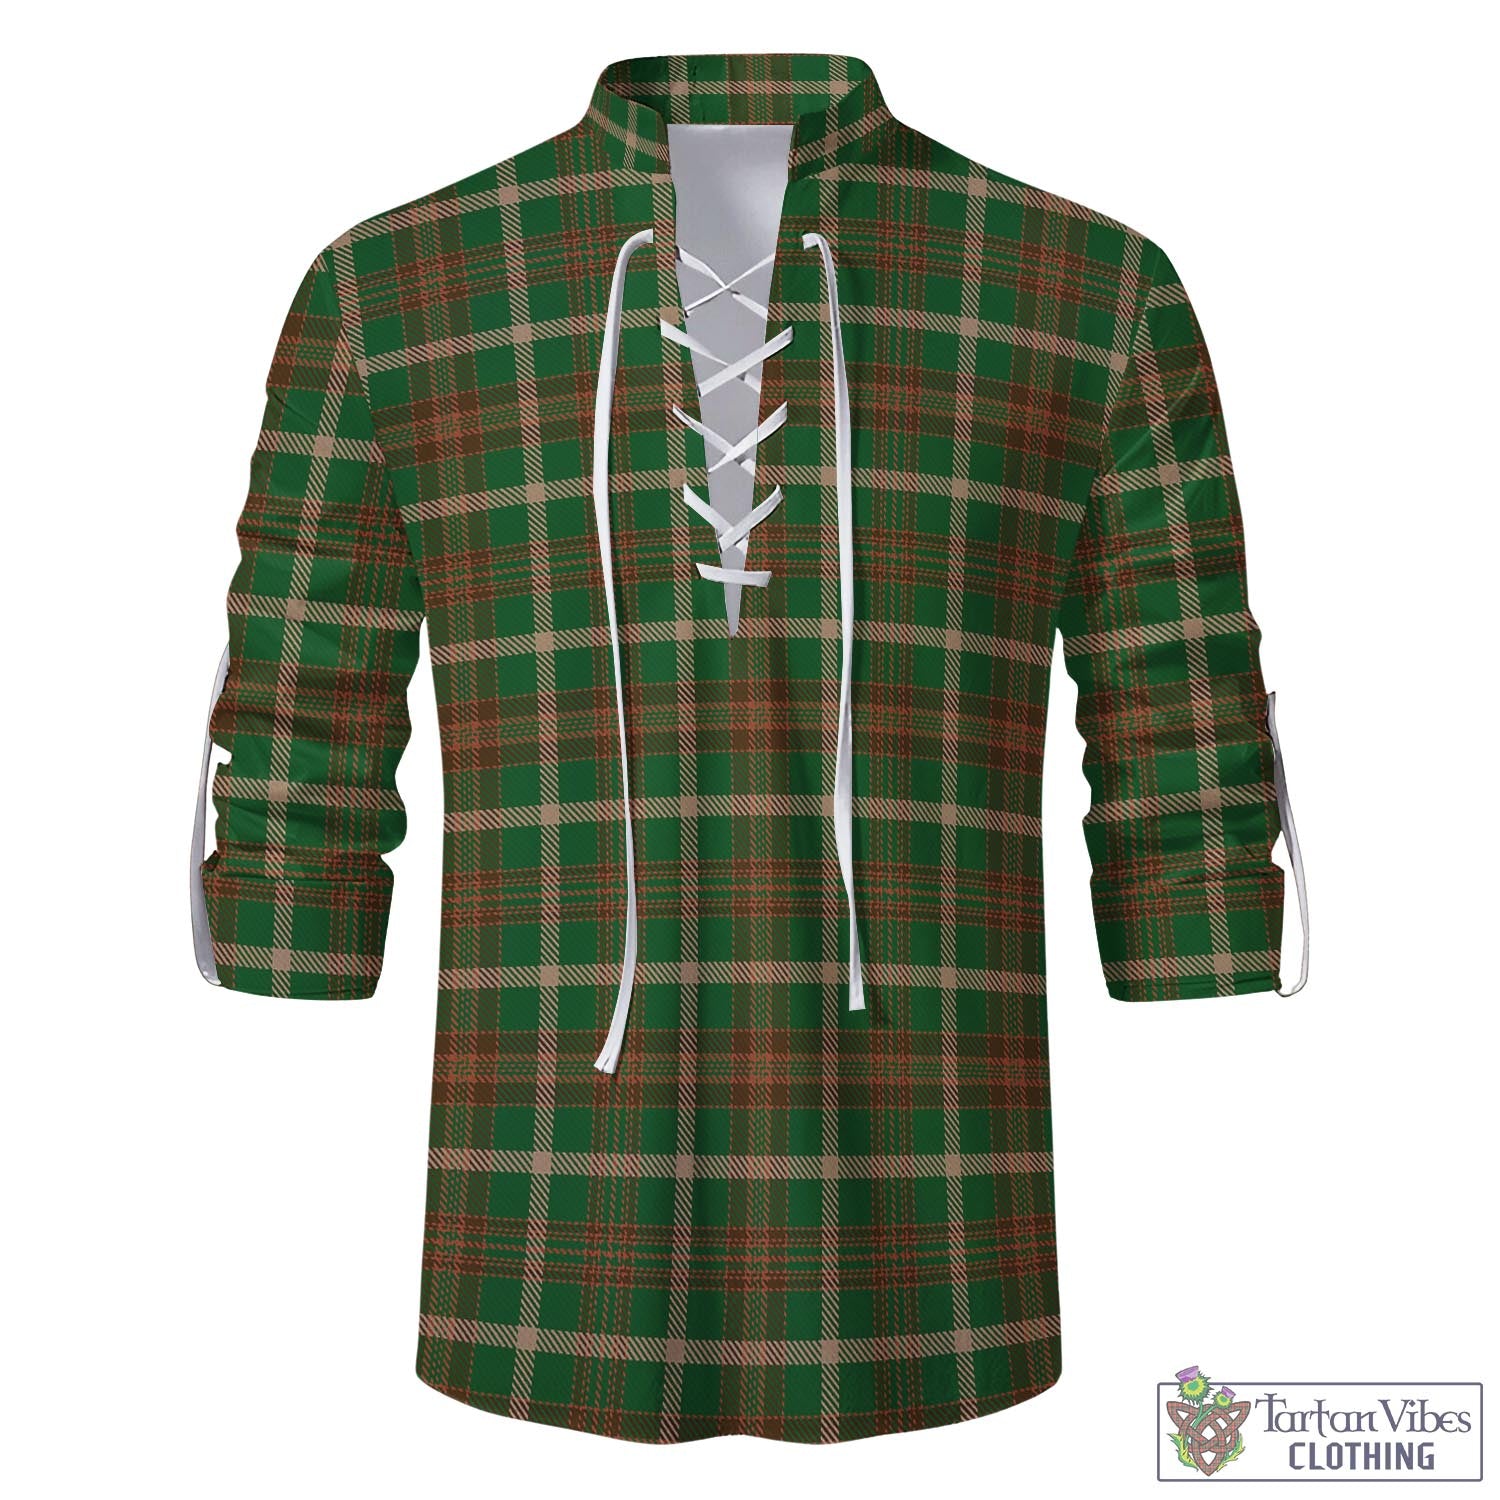 Tartan Vibes Clothing Copeland Tartan Men's Scottish Traditional Jacobite Ghillie Kilt Shirt